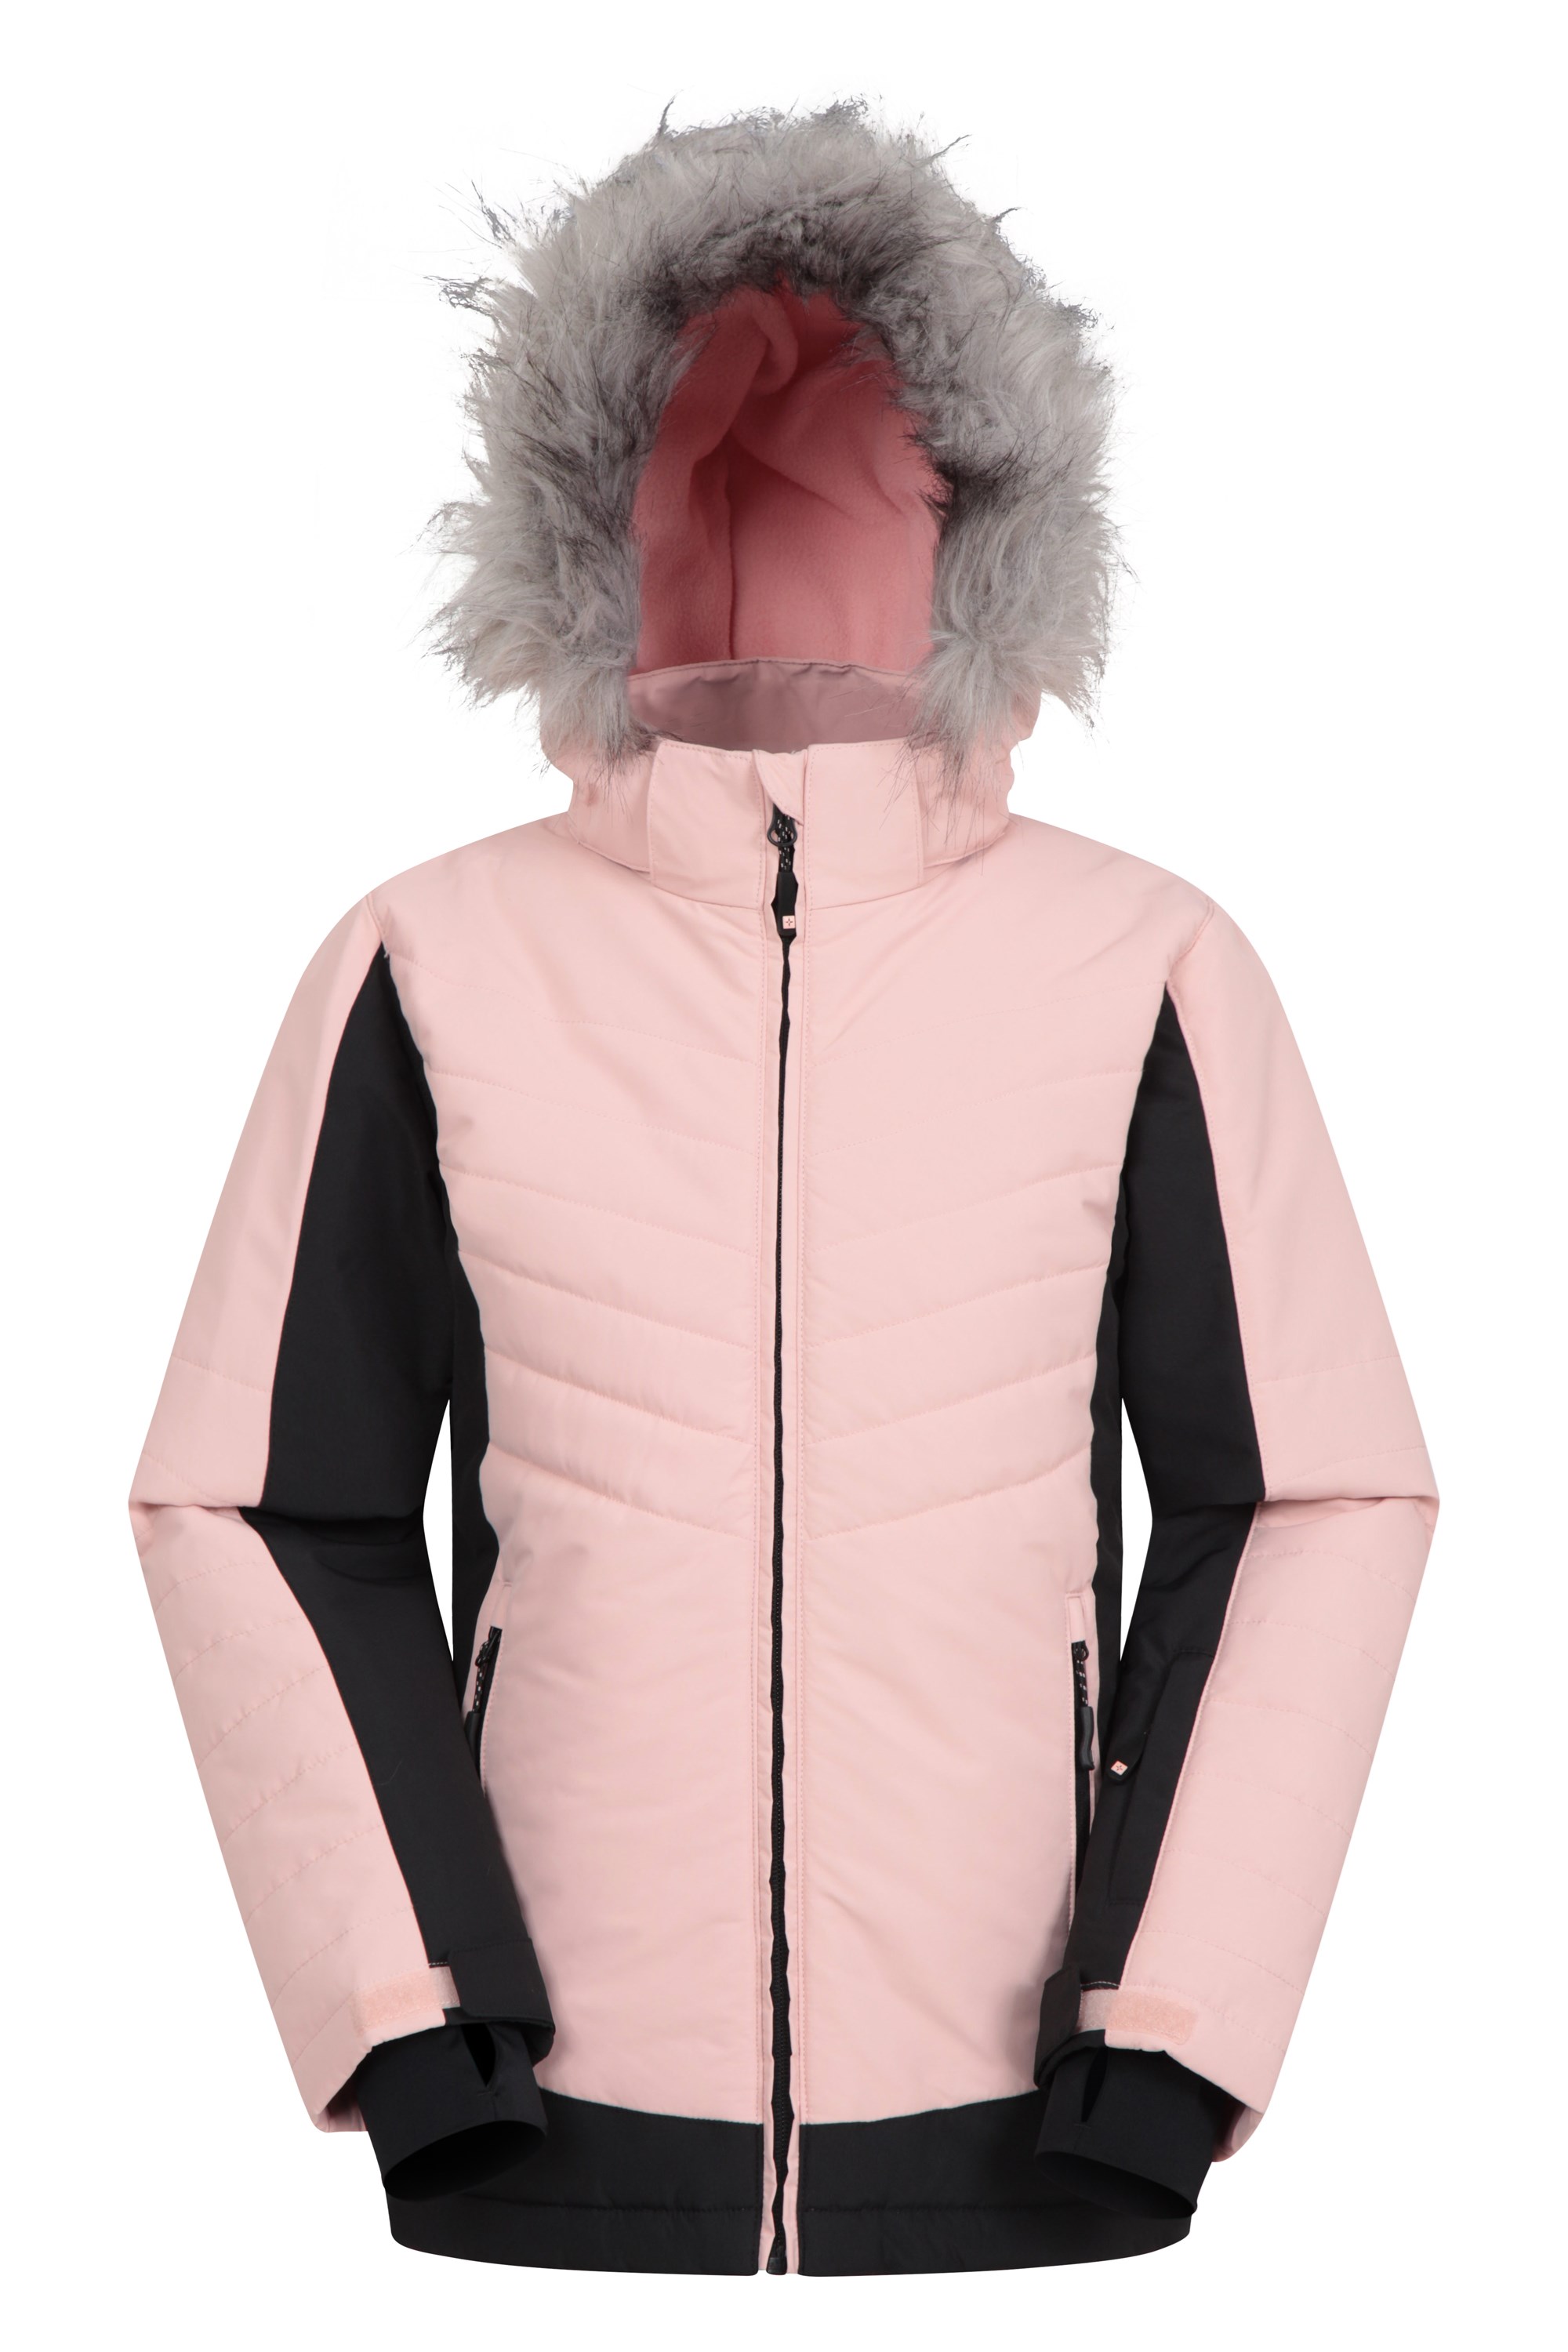 Mountain Warehouse Aspen Youth Padded Ski Jacket Breathable Detachable Hood Taped Seams 